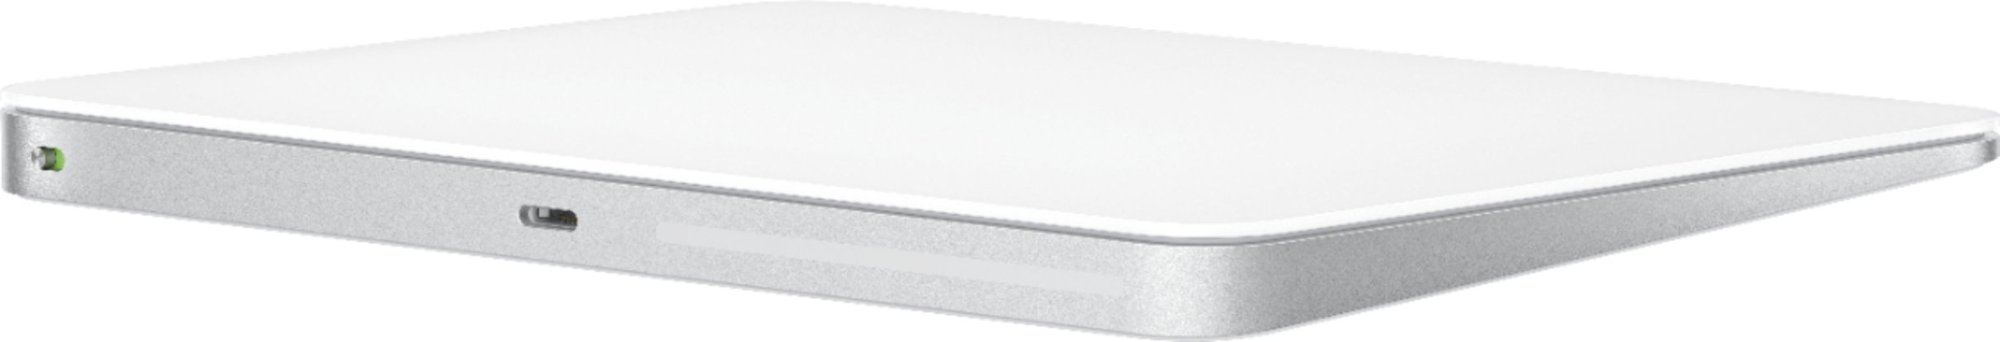 Apple - Magic Trackpad - White-White